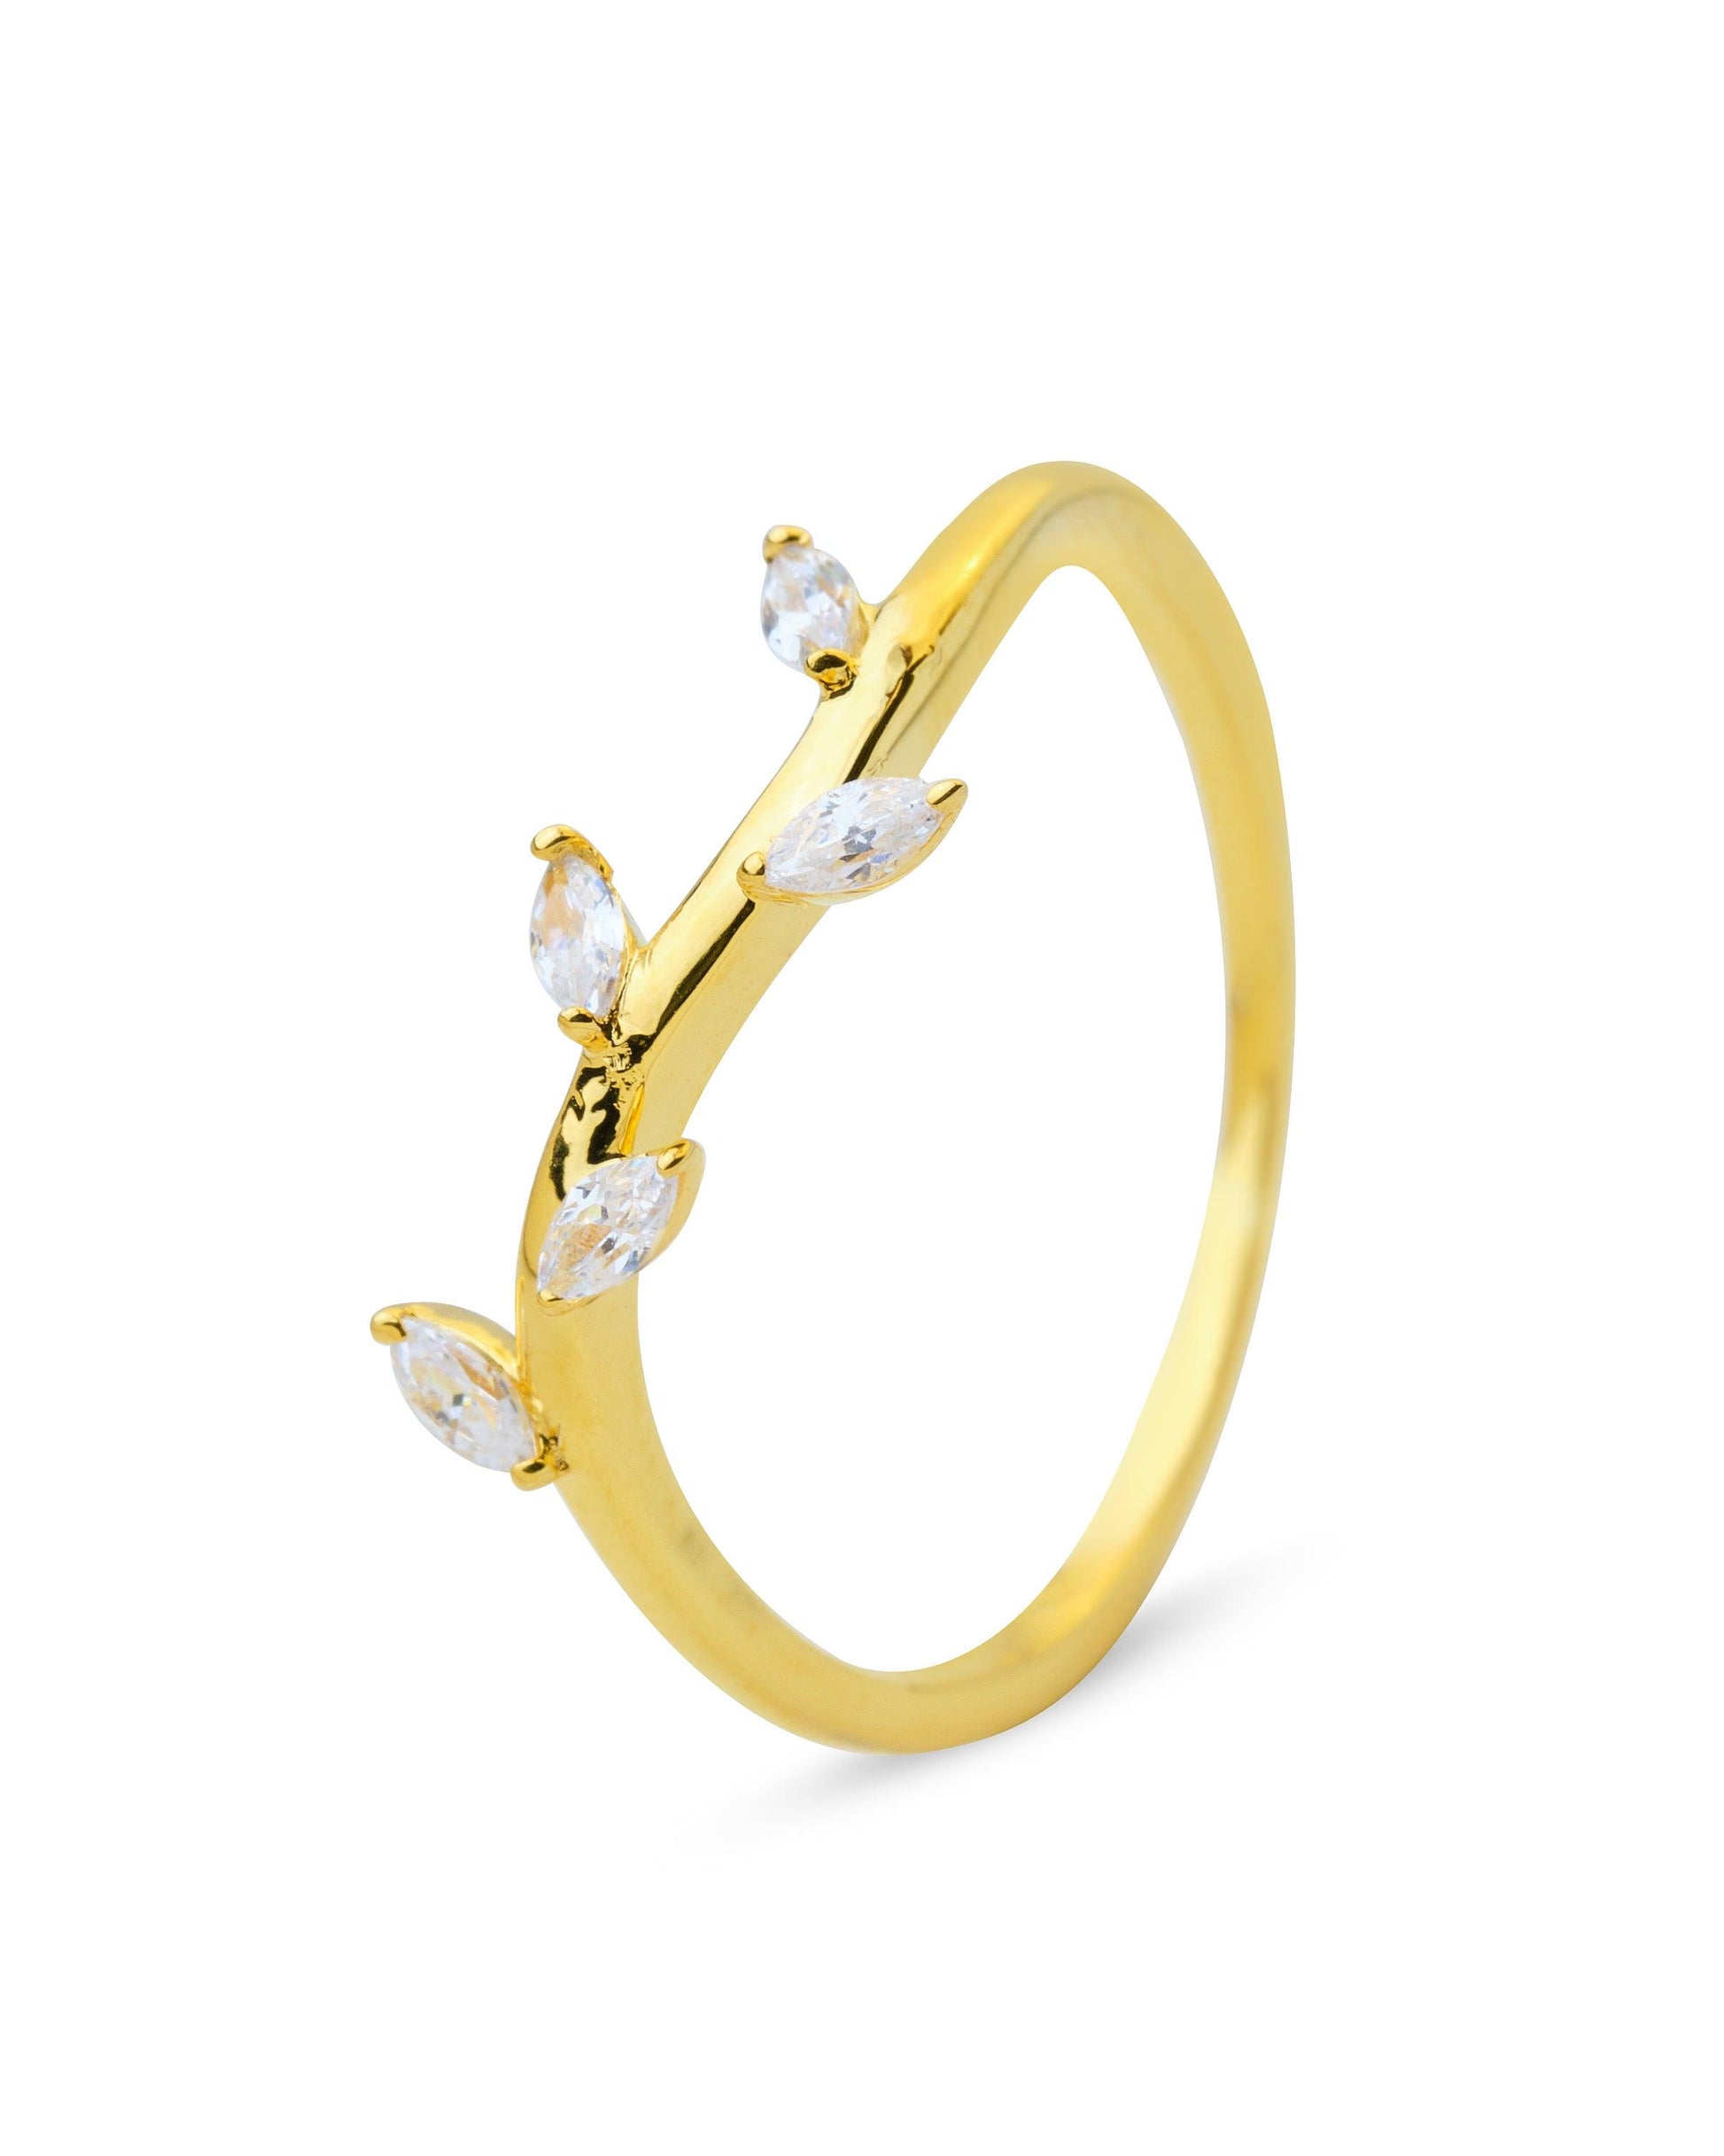 Deviant Twine Gold & Diamond Ring - Chandrani Pearls